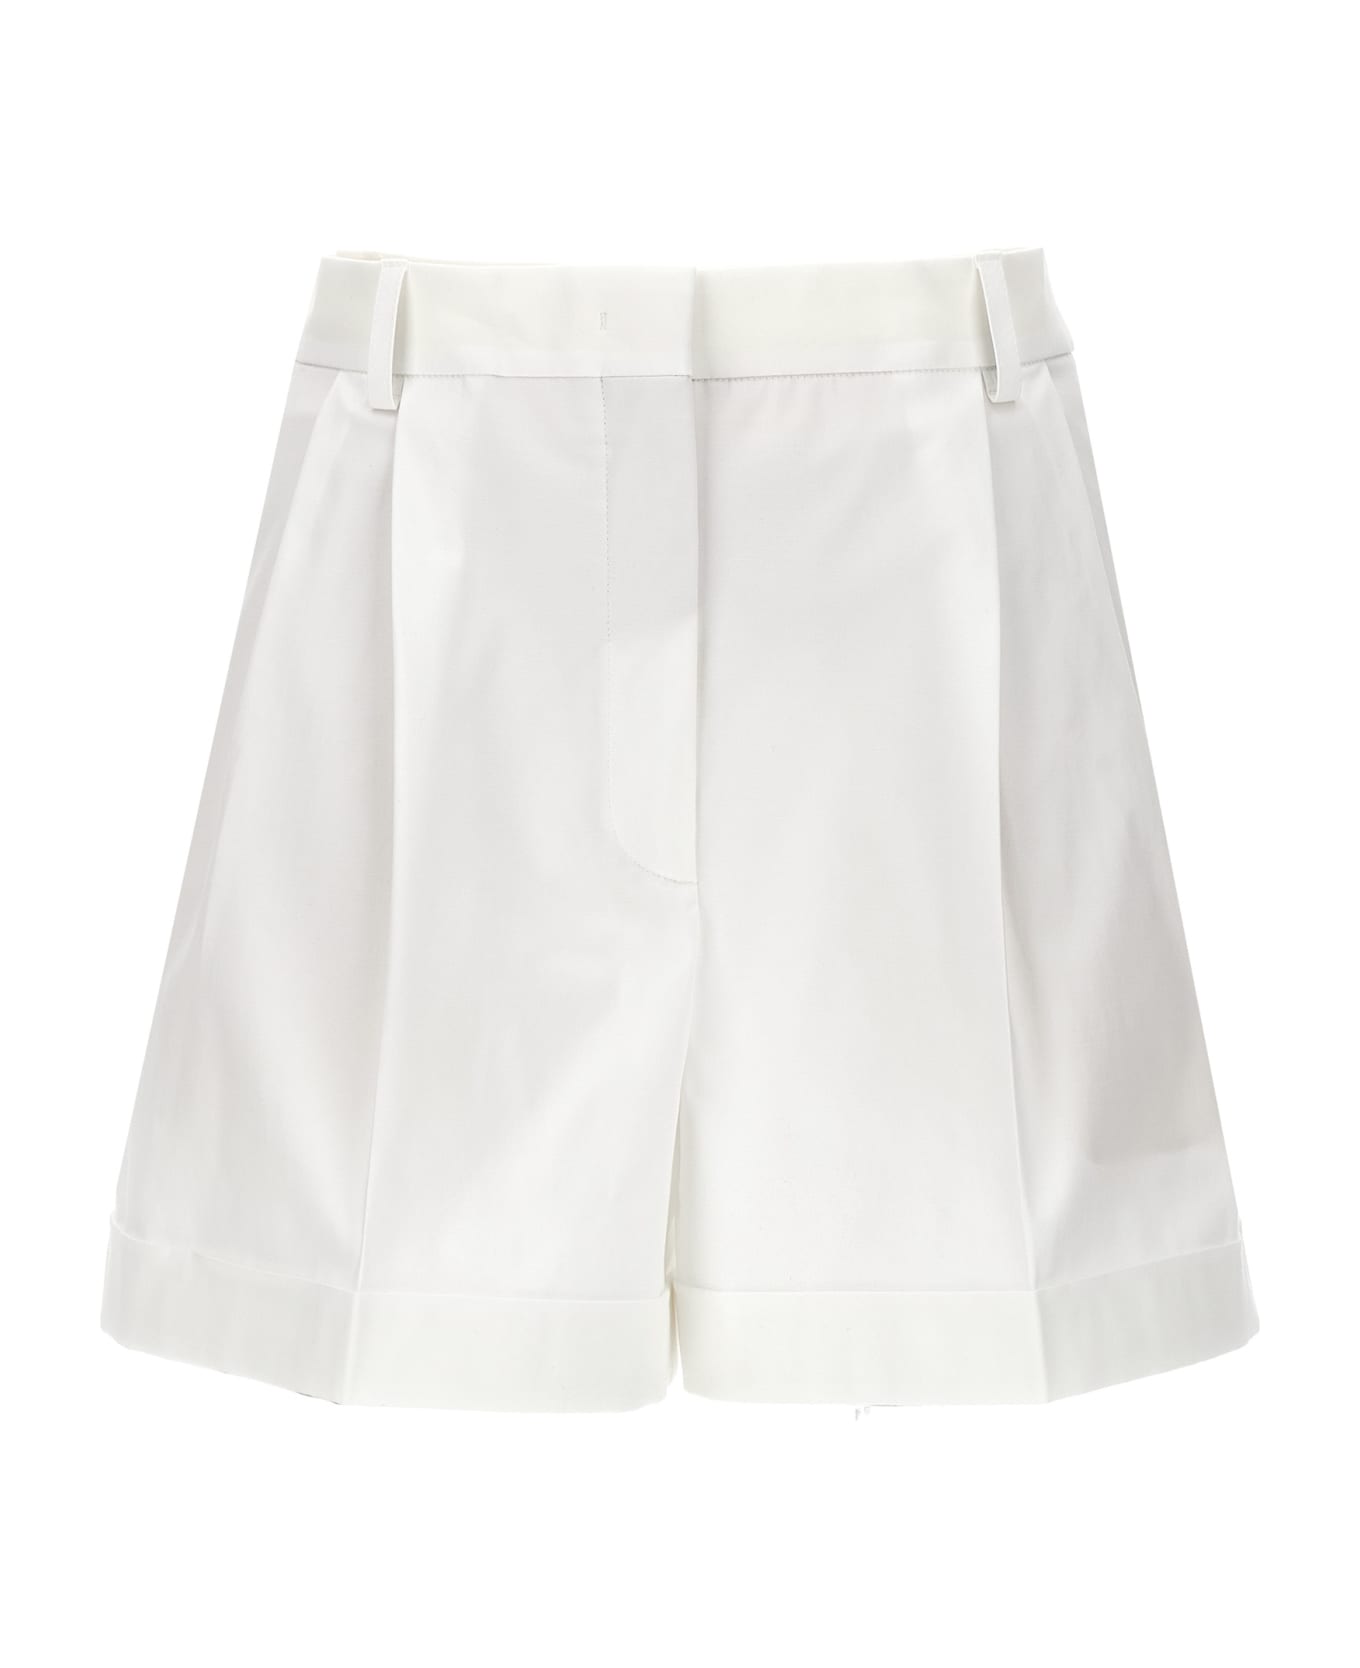 Moschino 'classic' Shorts - White ショートパンツ